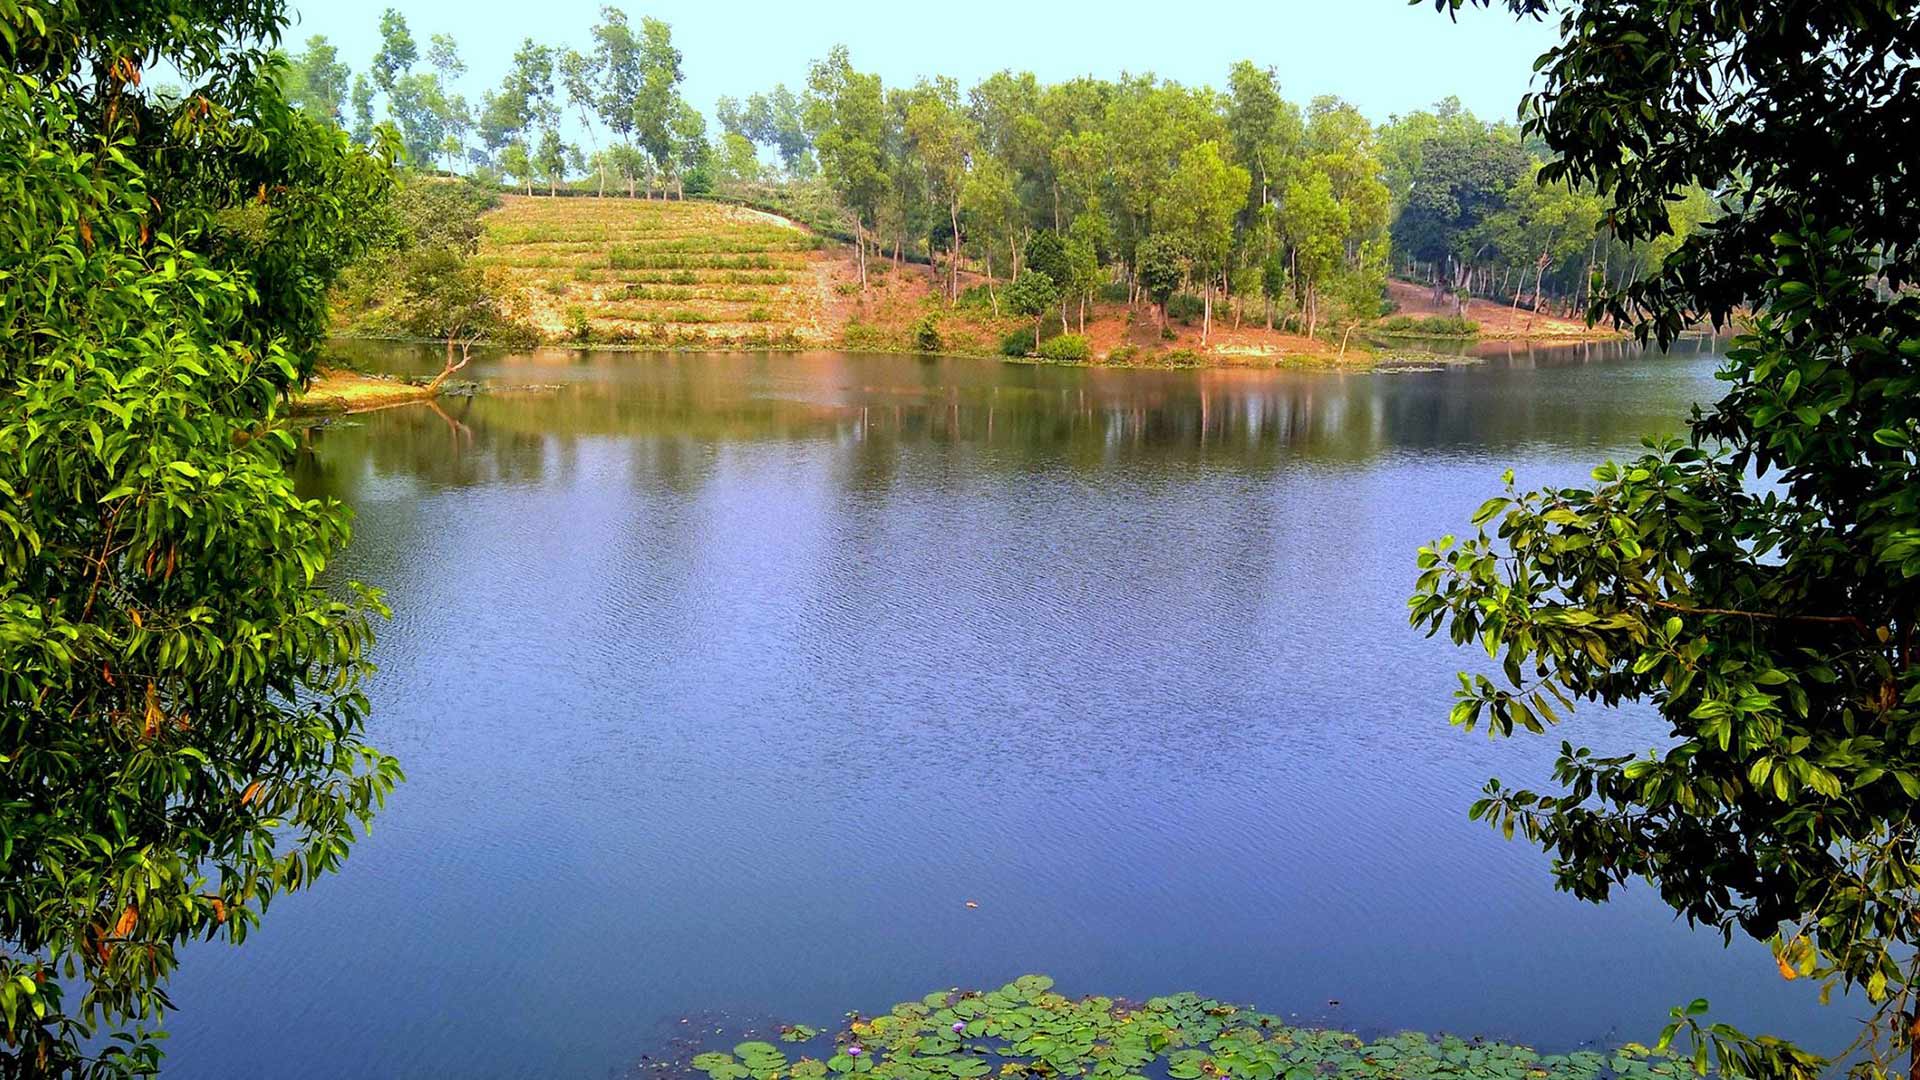 Visit Madhavpur Lake in Srimangal this monsoon